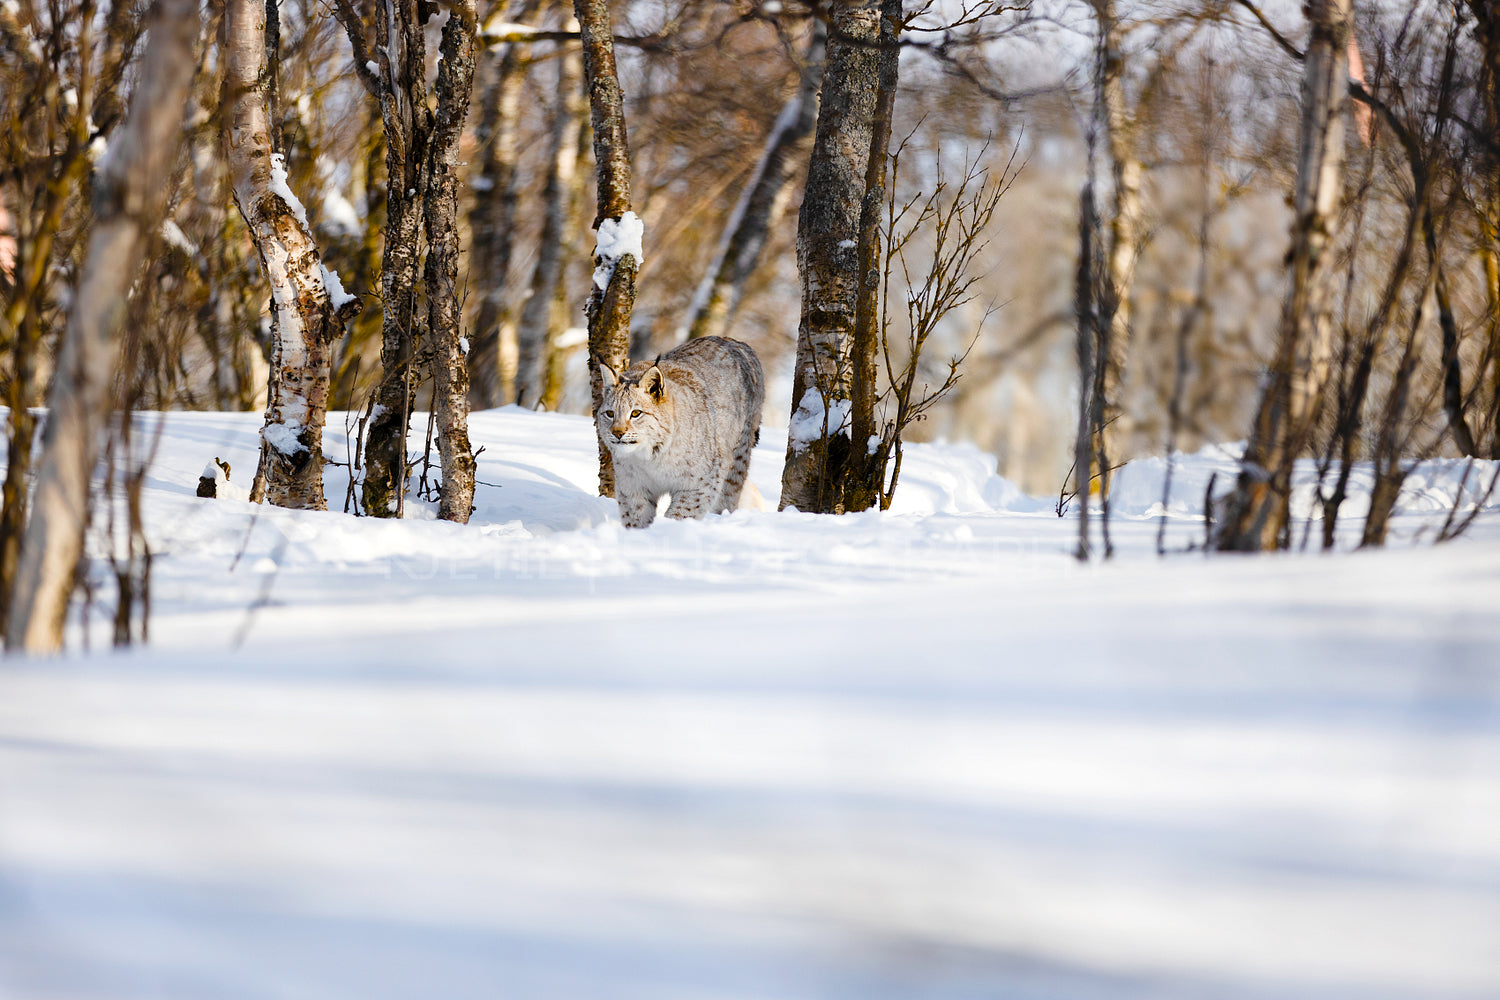 Eurasian lynx strolling on snow amidst bare trees